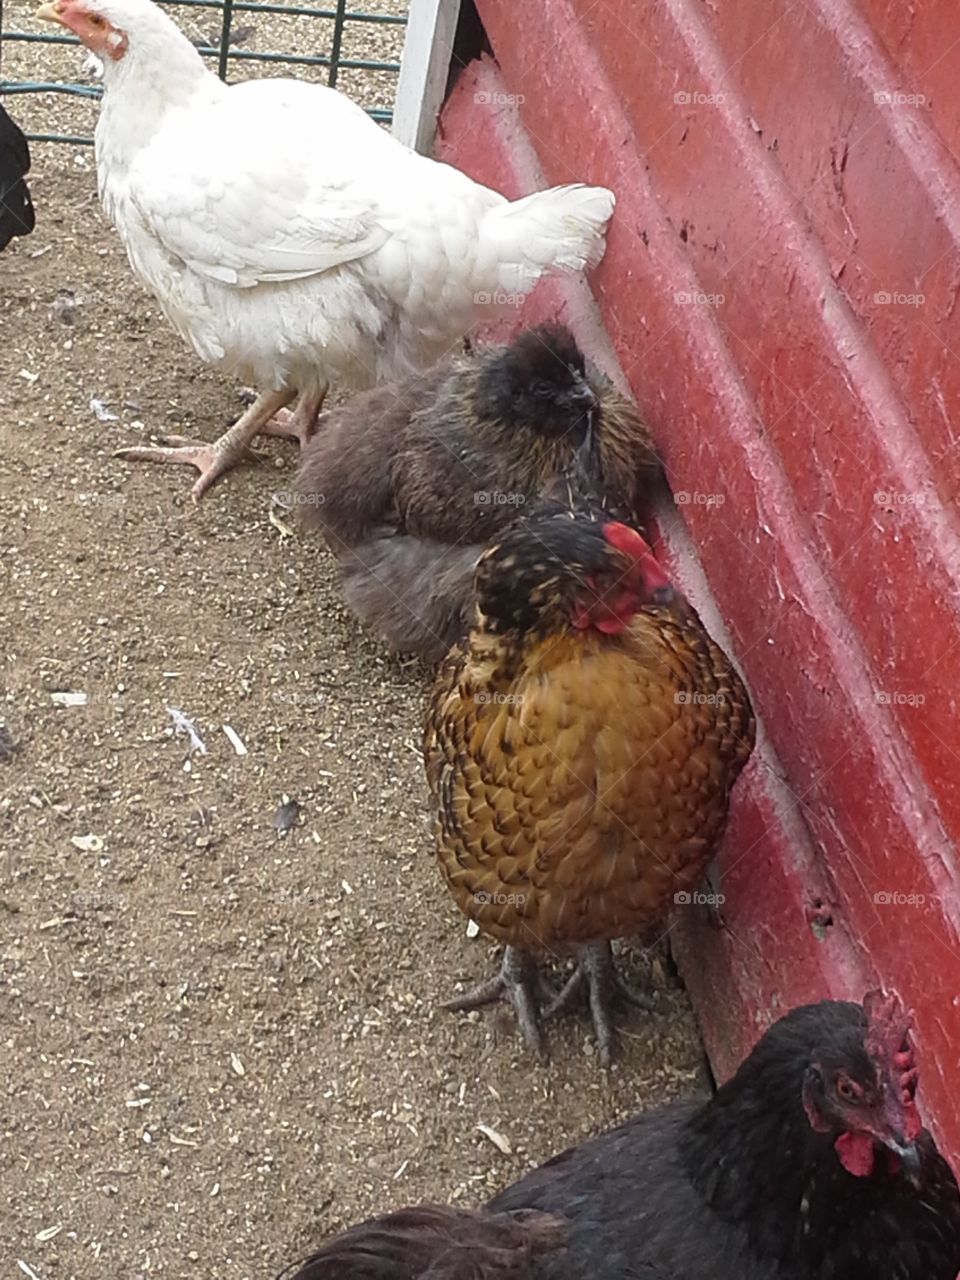 Chicken huddle